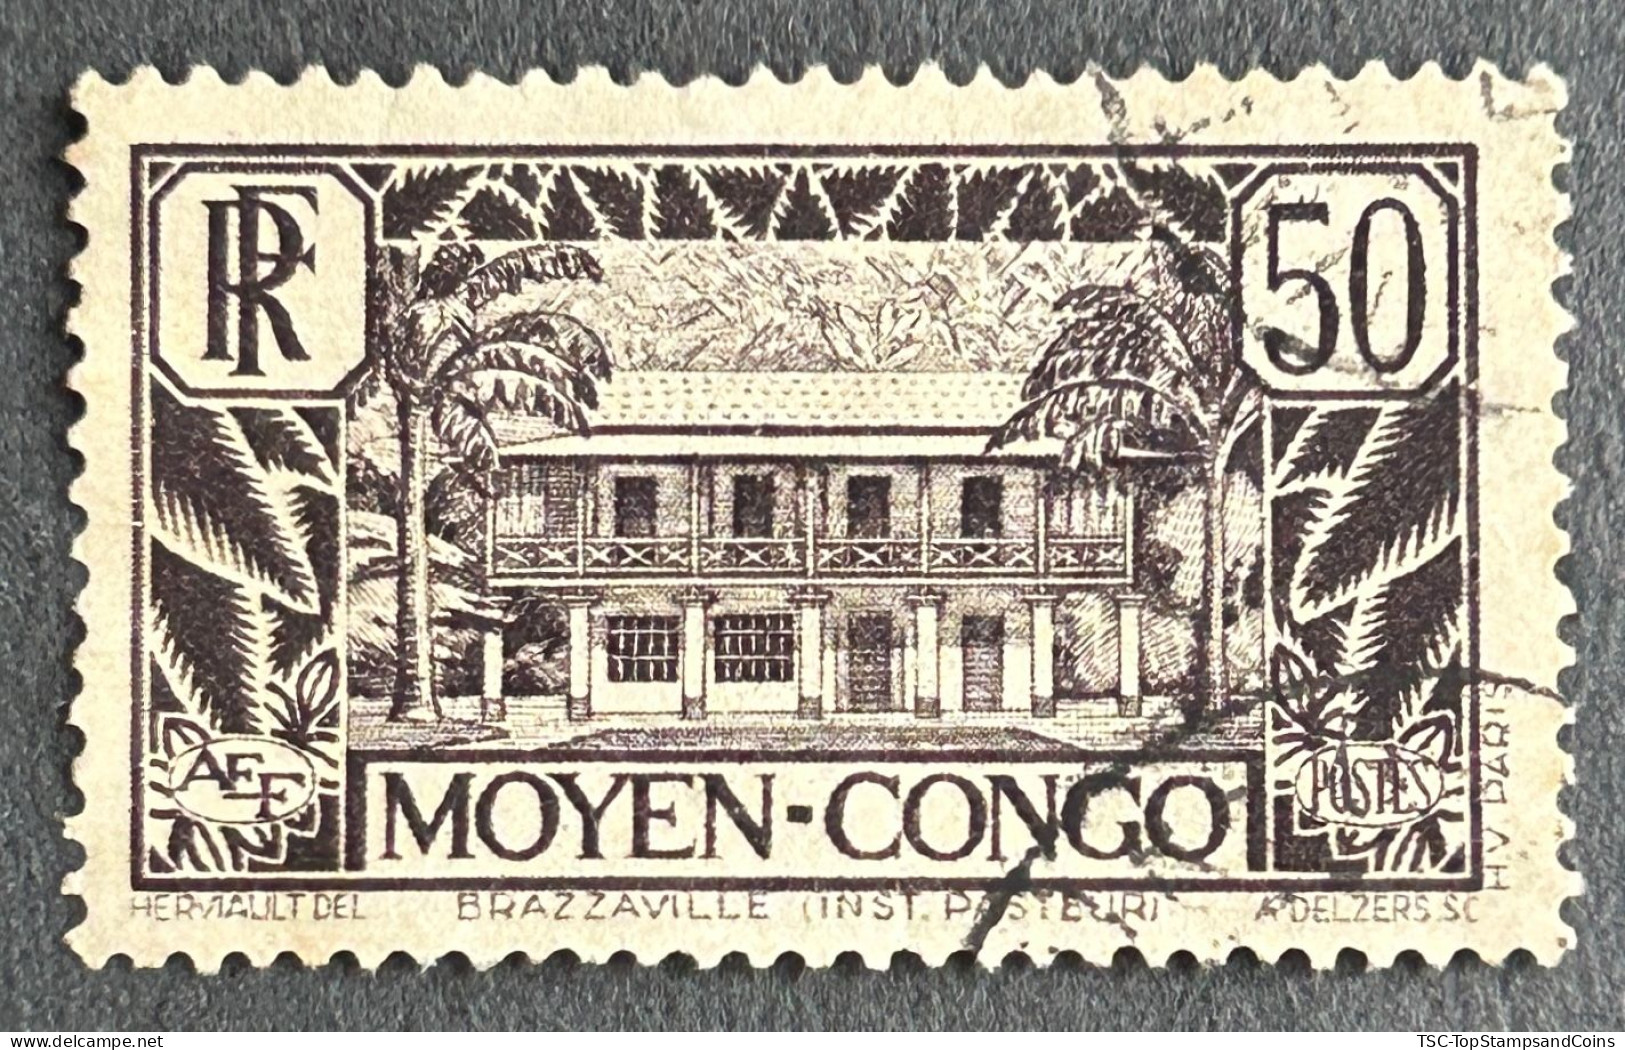 FRCG124U1 - Brazzaville - Pasteur Institute - 50 C Used Stamp - Middle Congo - 1933 - Usados